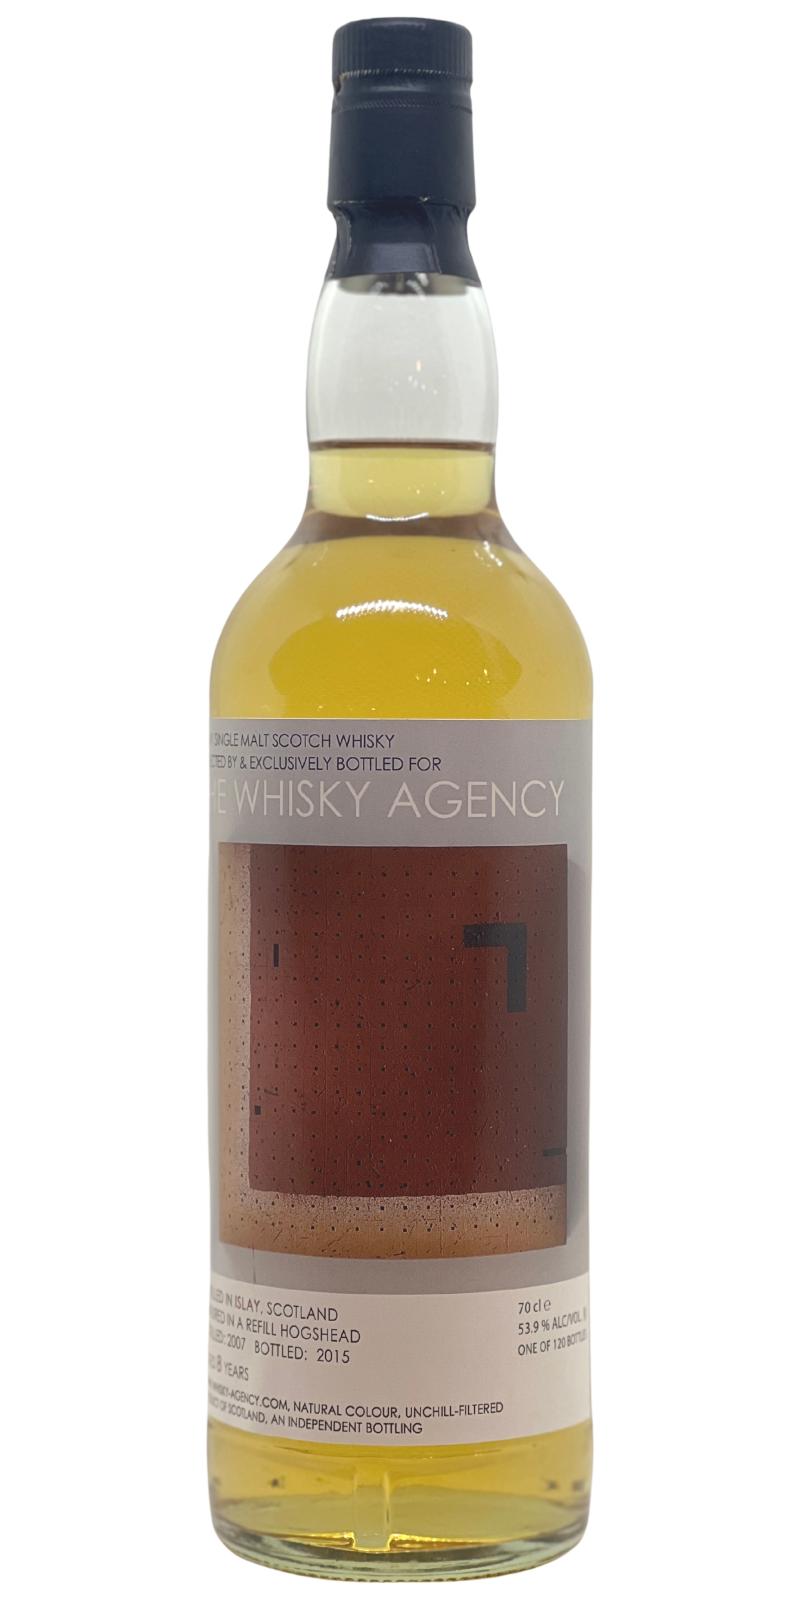 Islay Single Malt Scotch Whisky 2007 TWA Refill Hogshead 53.9% 700ml